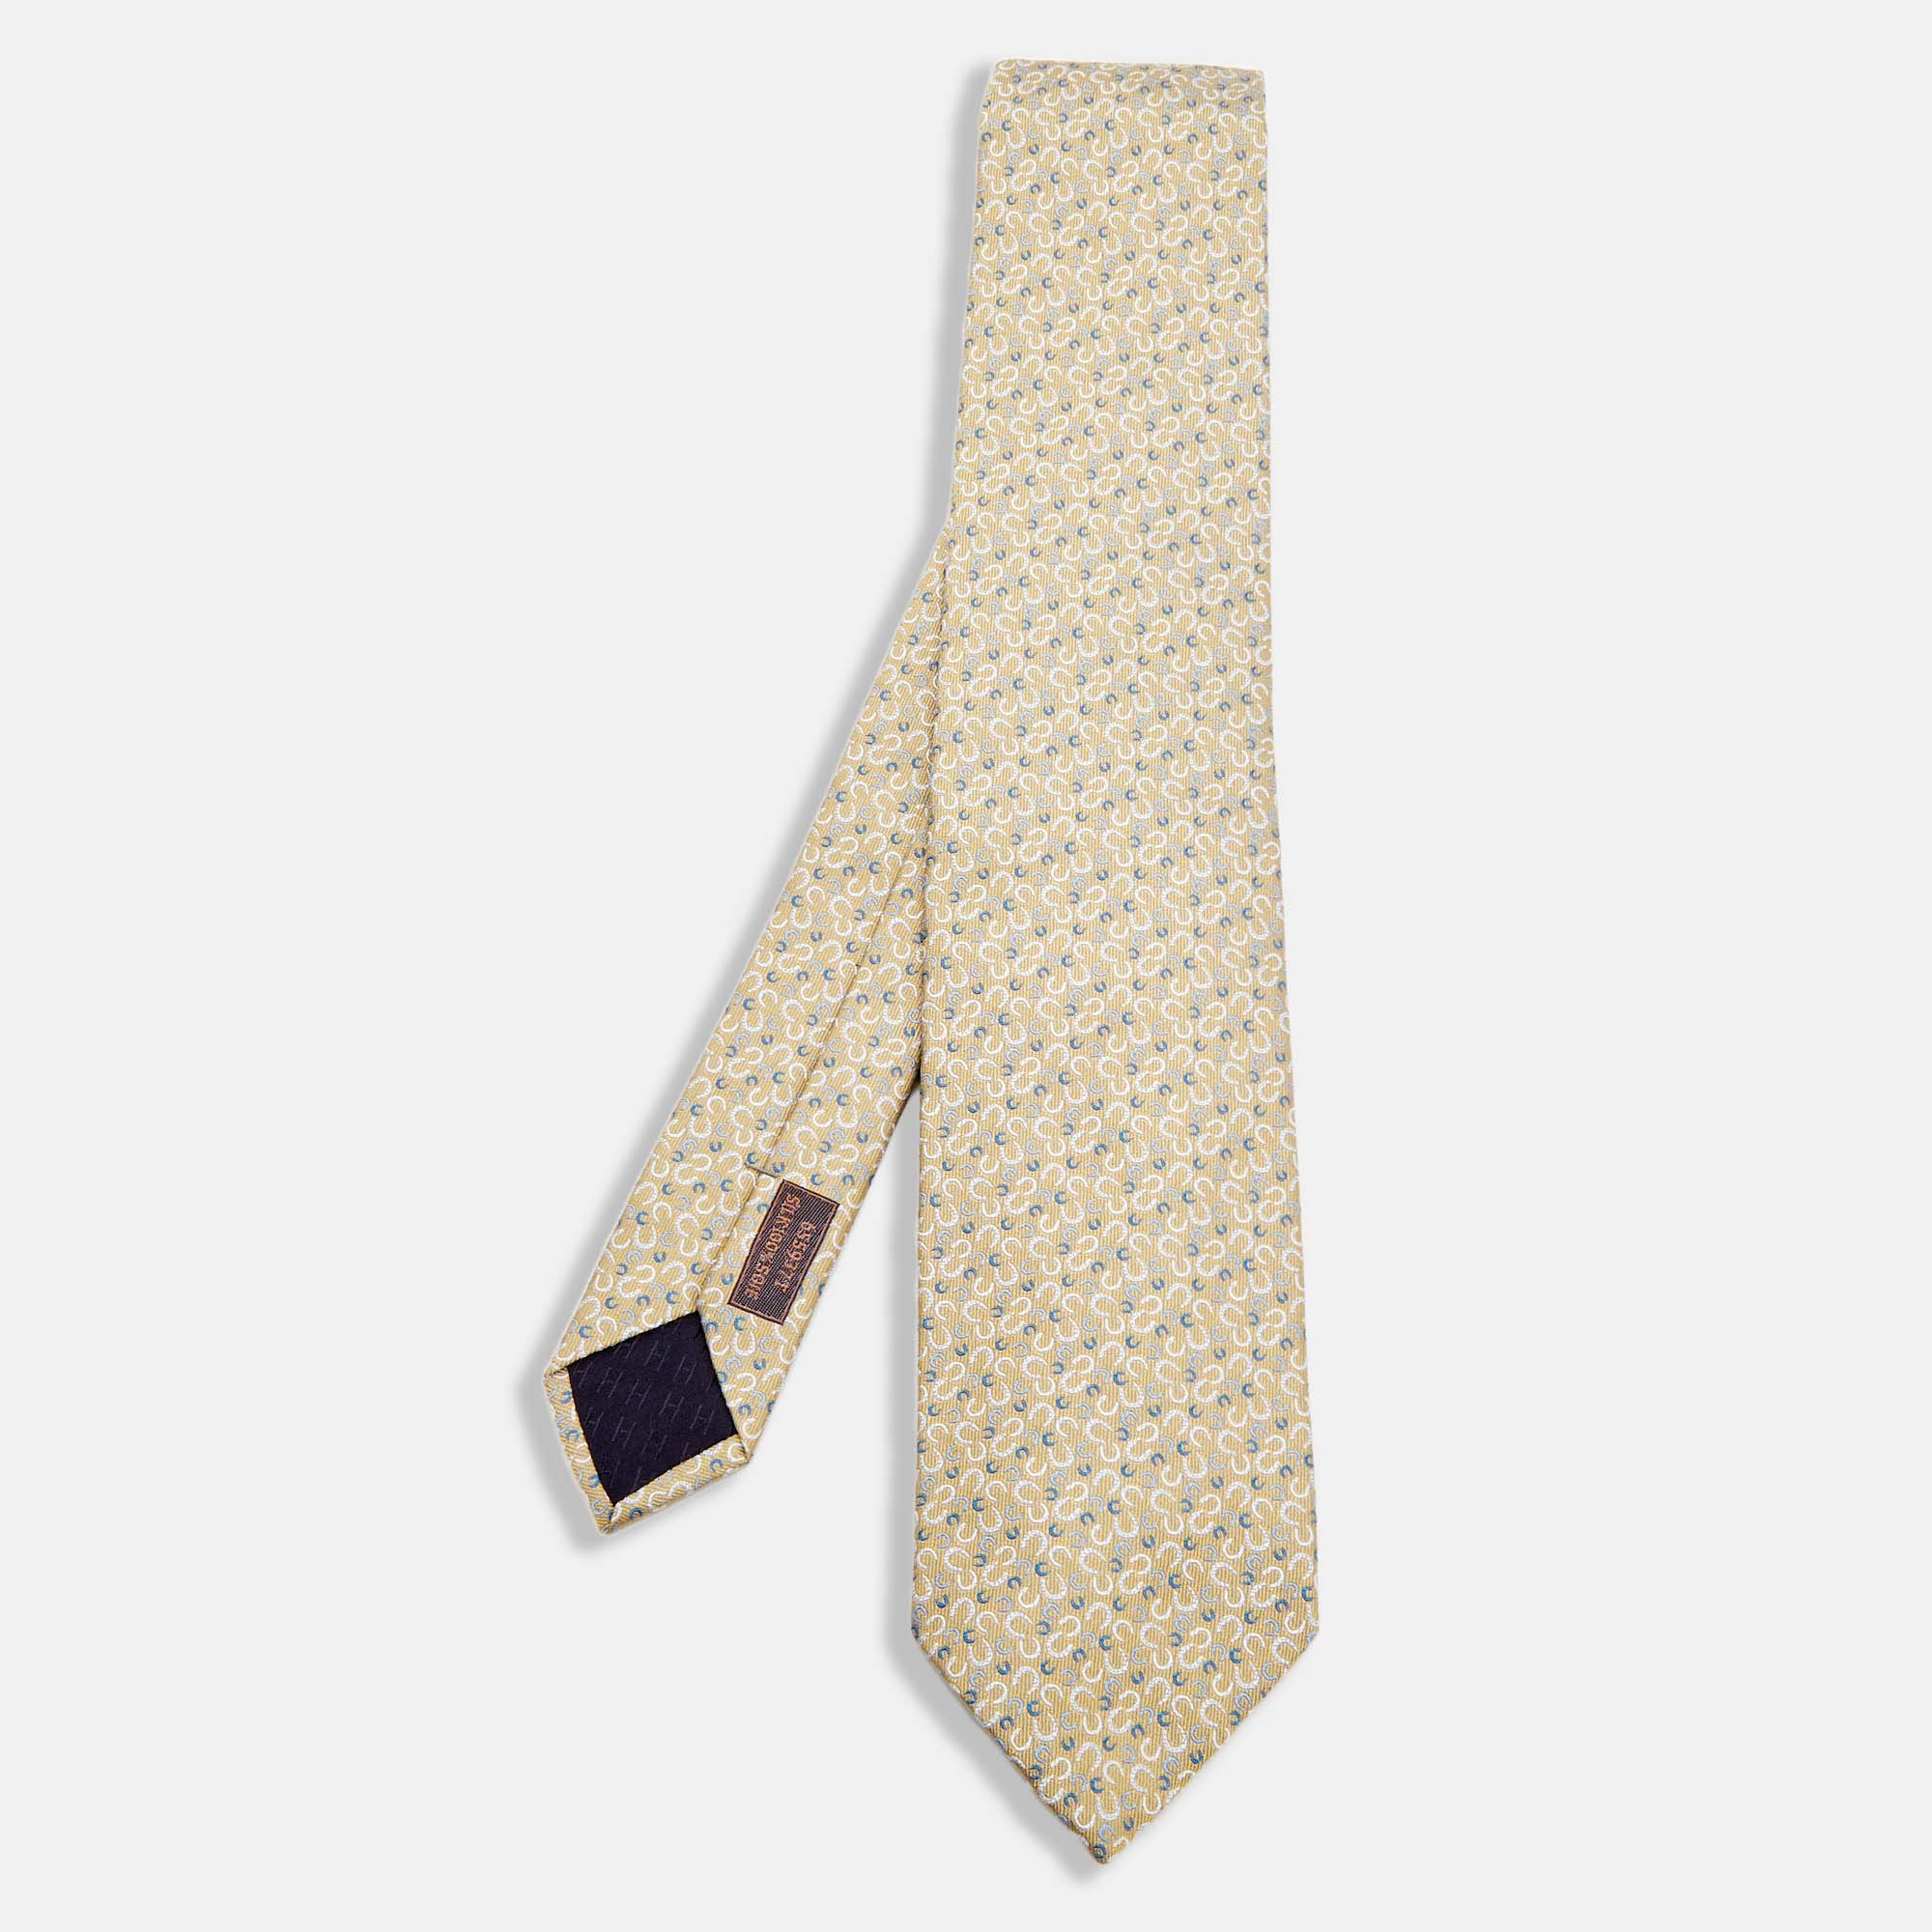 Hermes Light Yellow Patterned Silk Tie